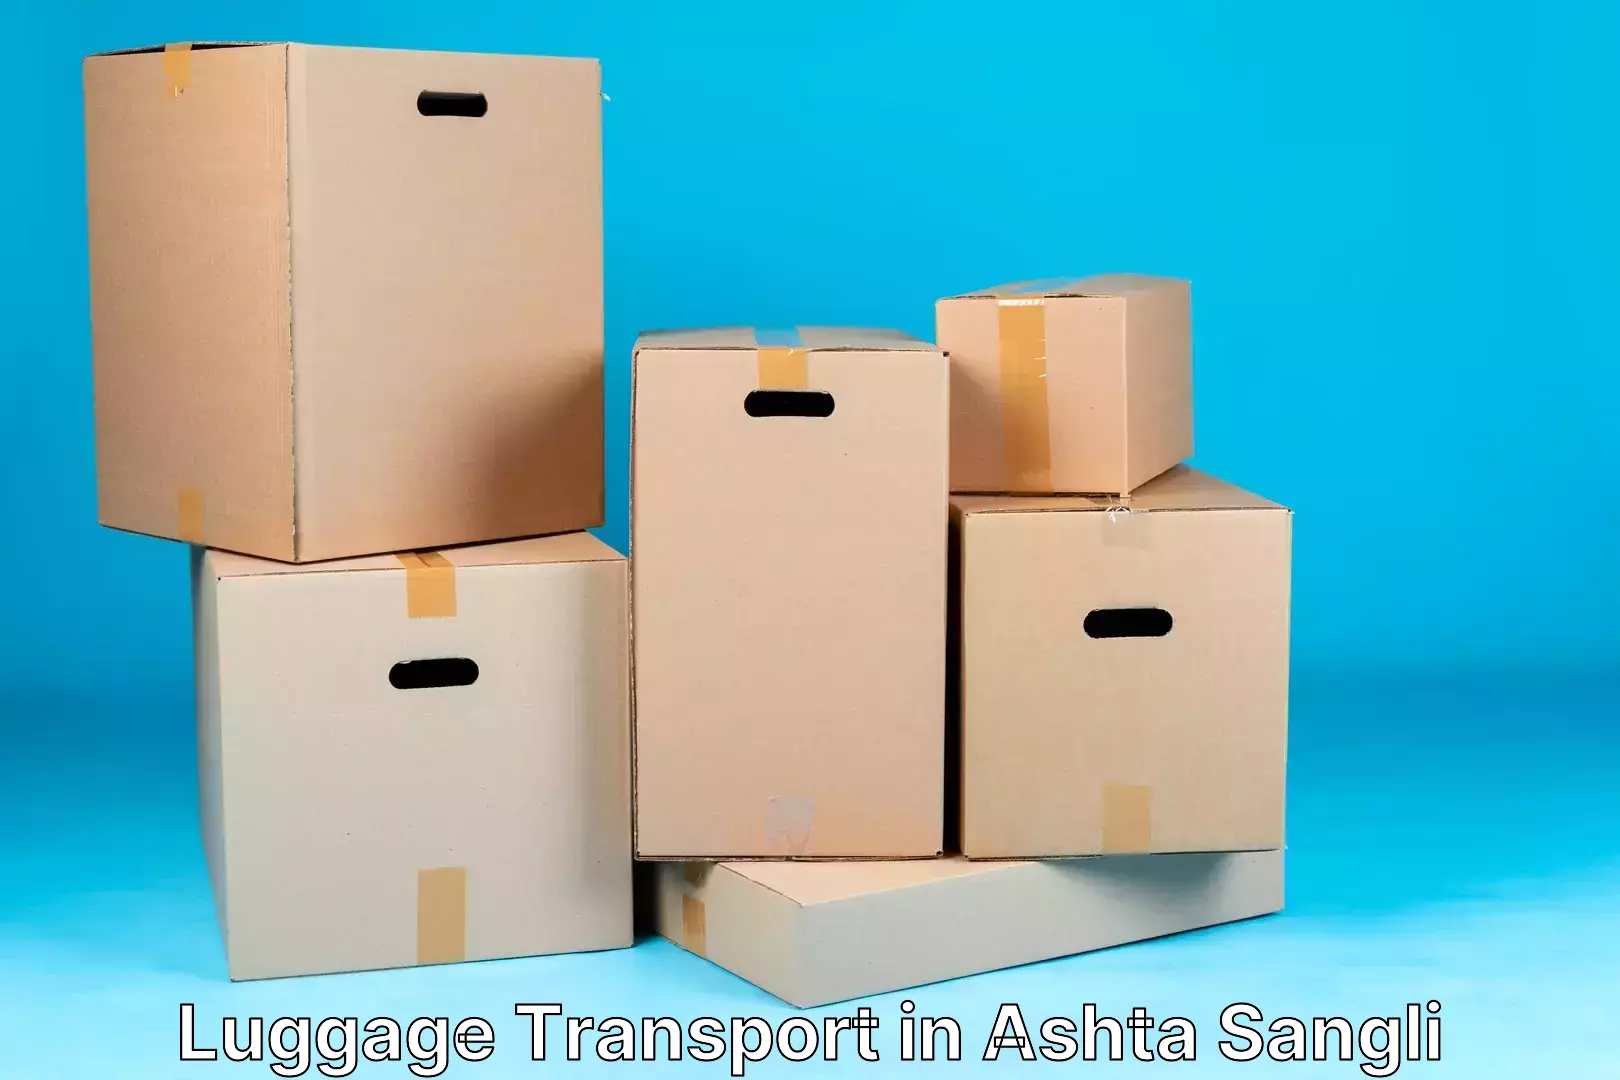 Urgent luggage shipment in Ashta Sangli